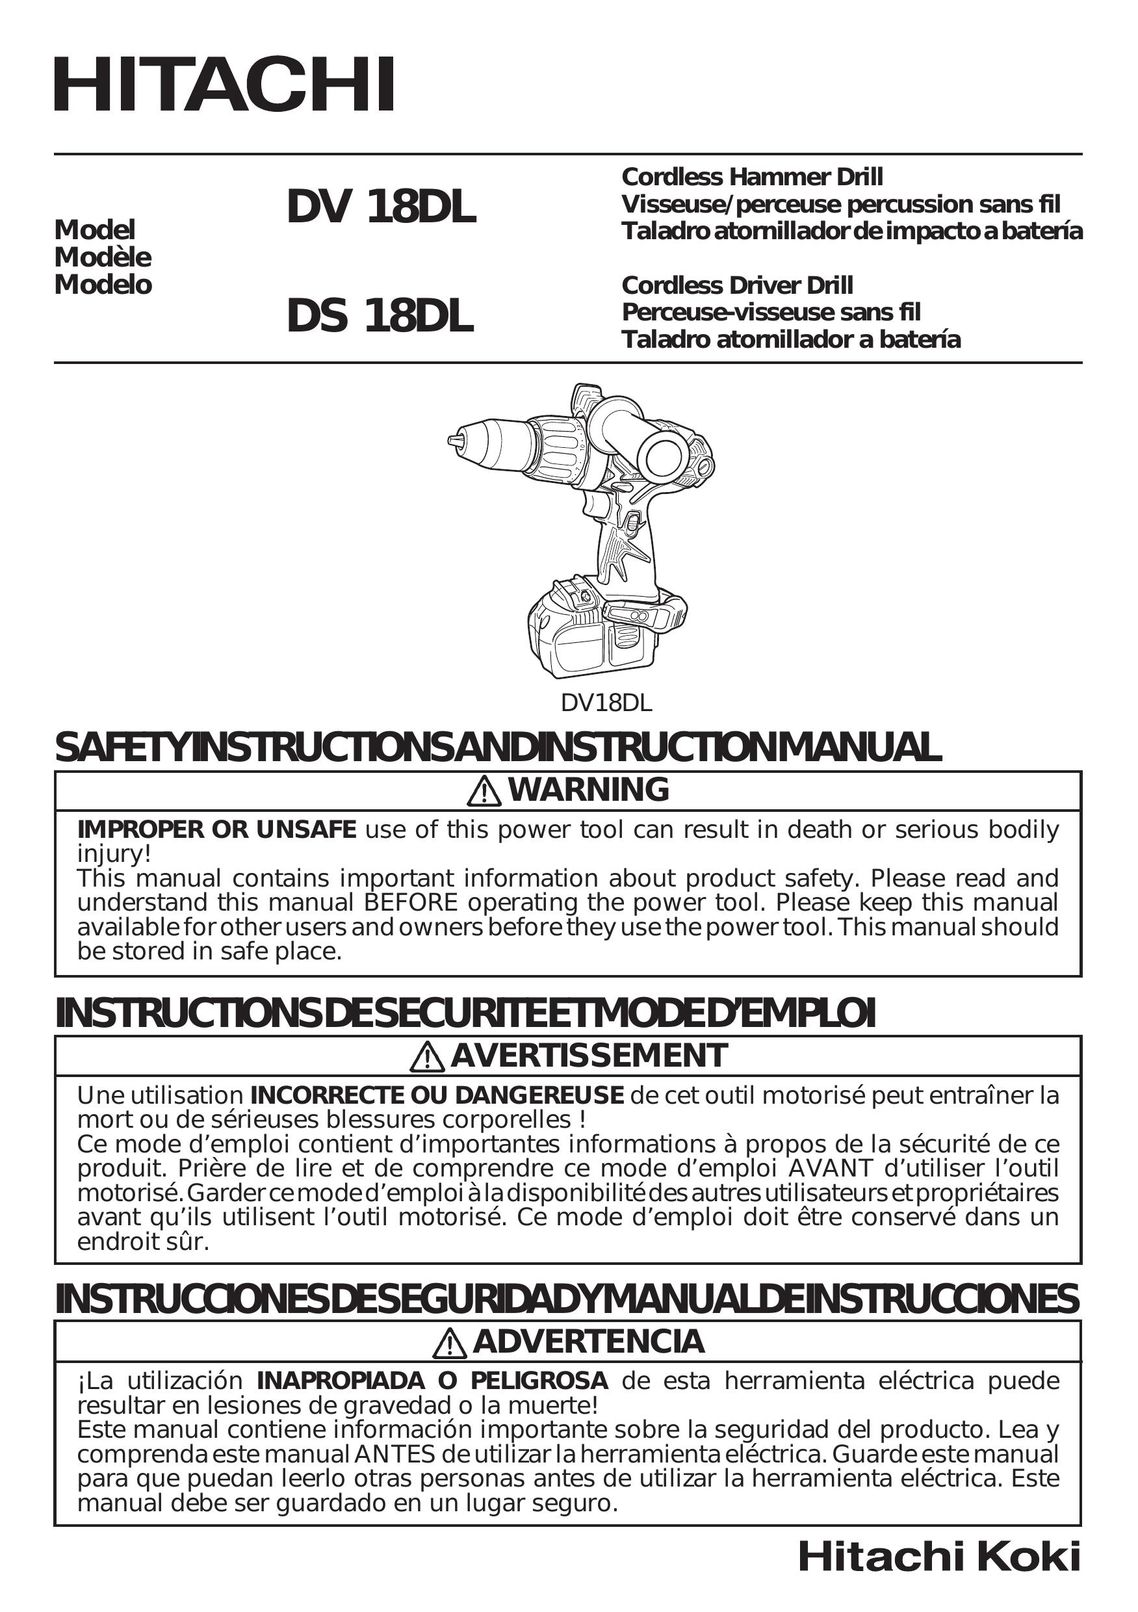 Hitachi DV 18DL Cordless Drill User Manual